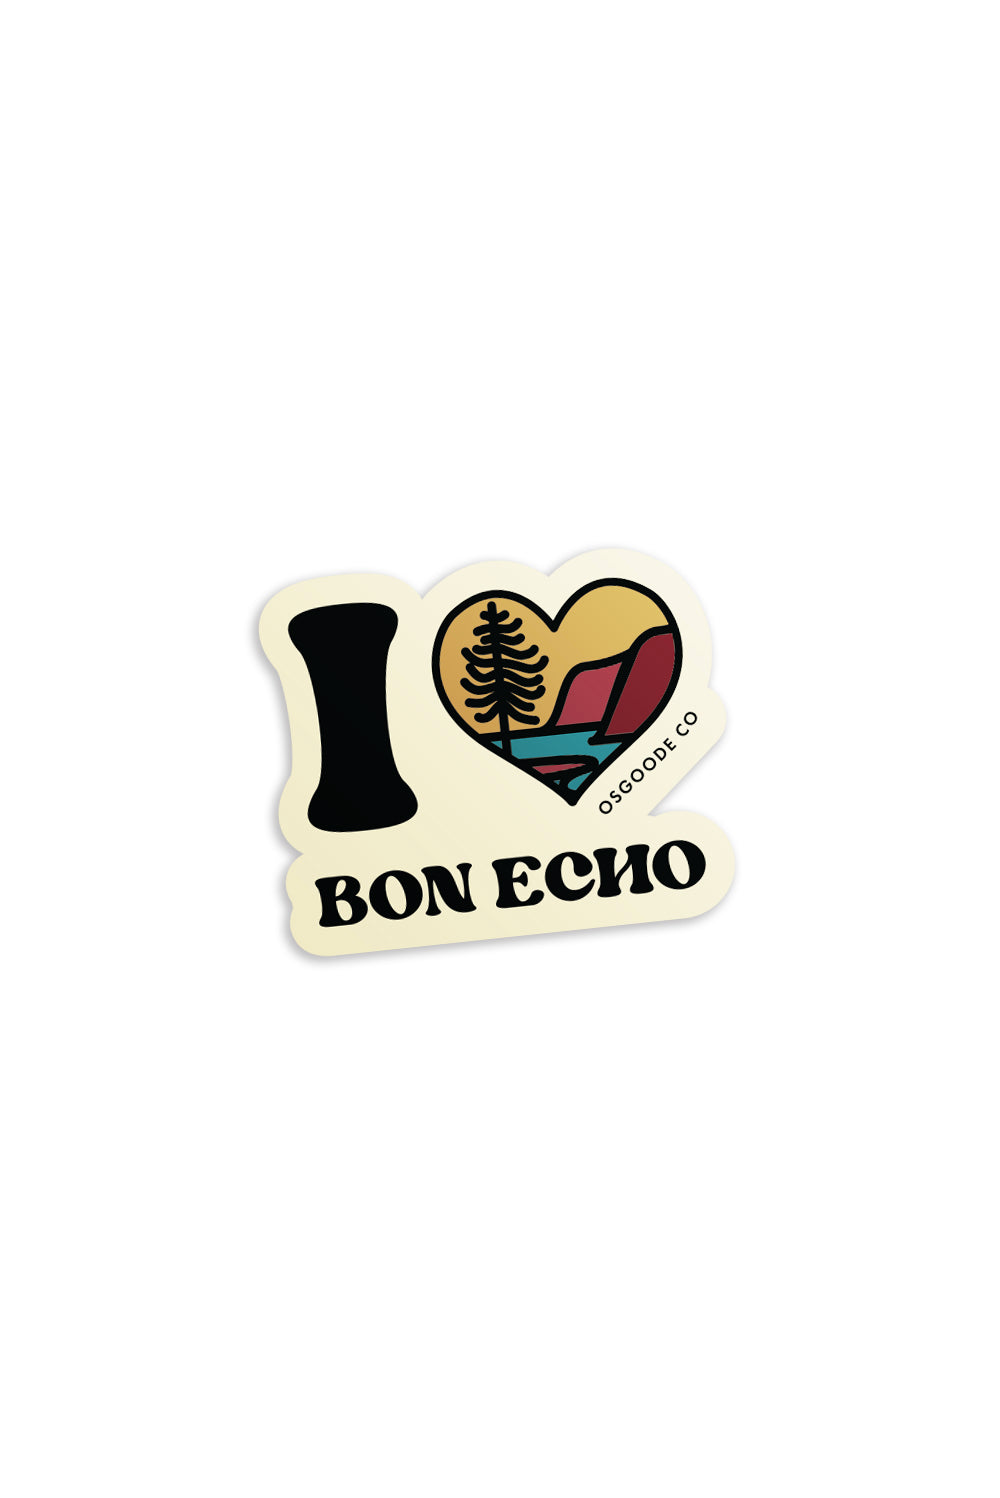 BON ECHO STICKER